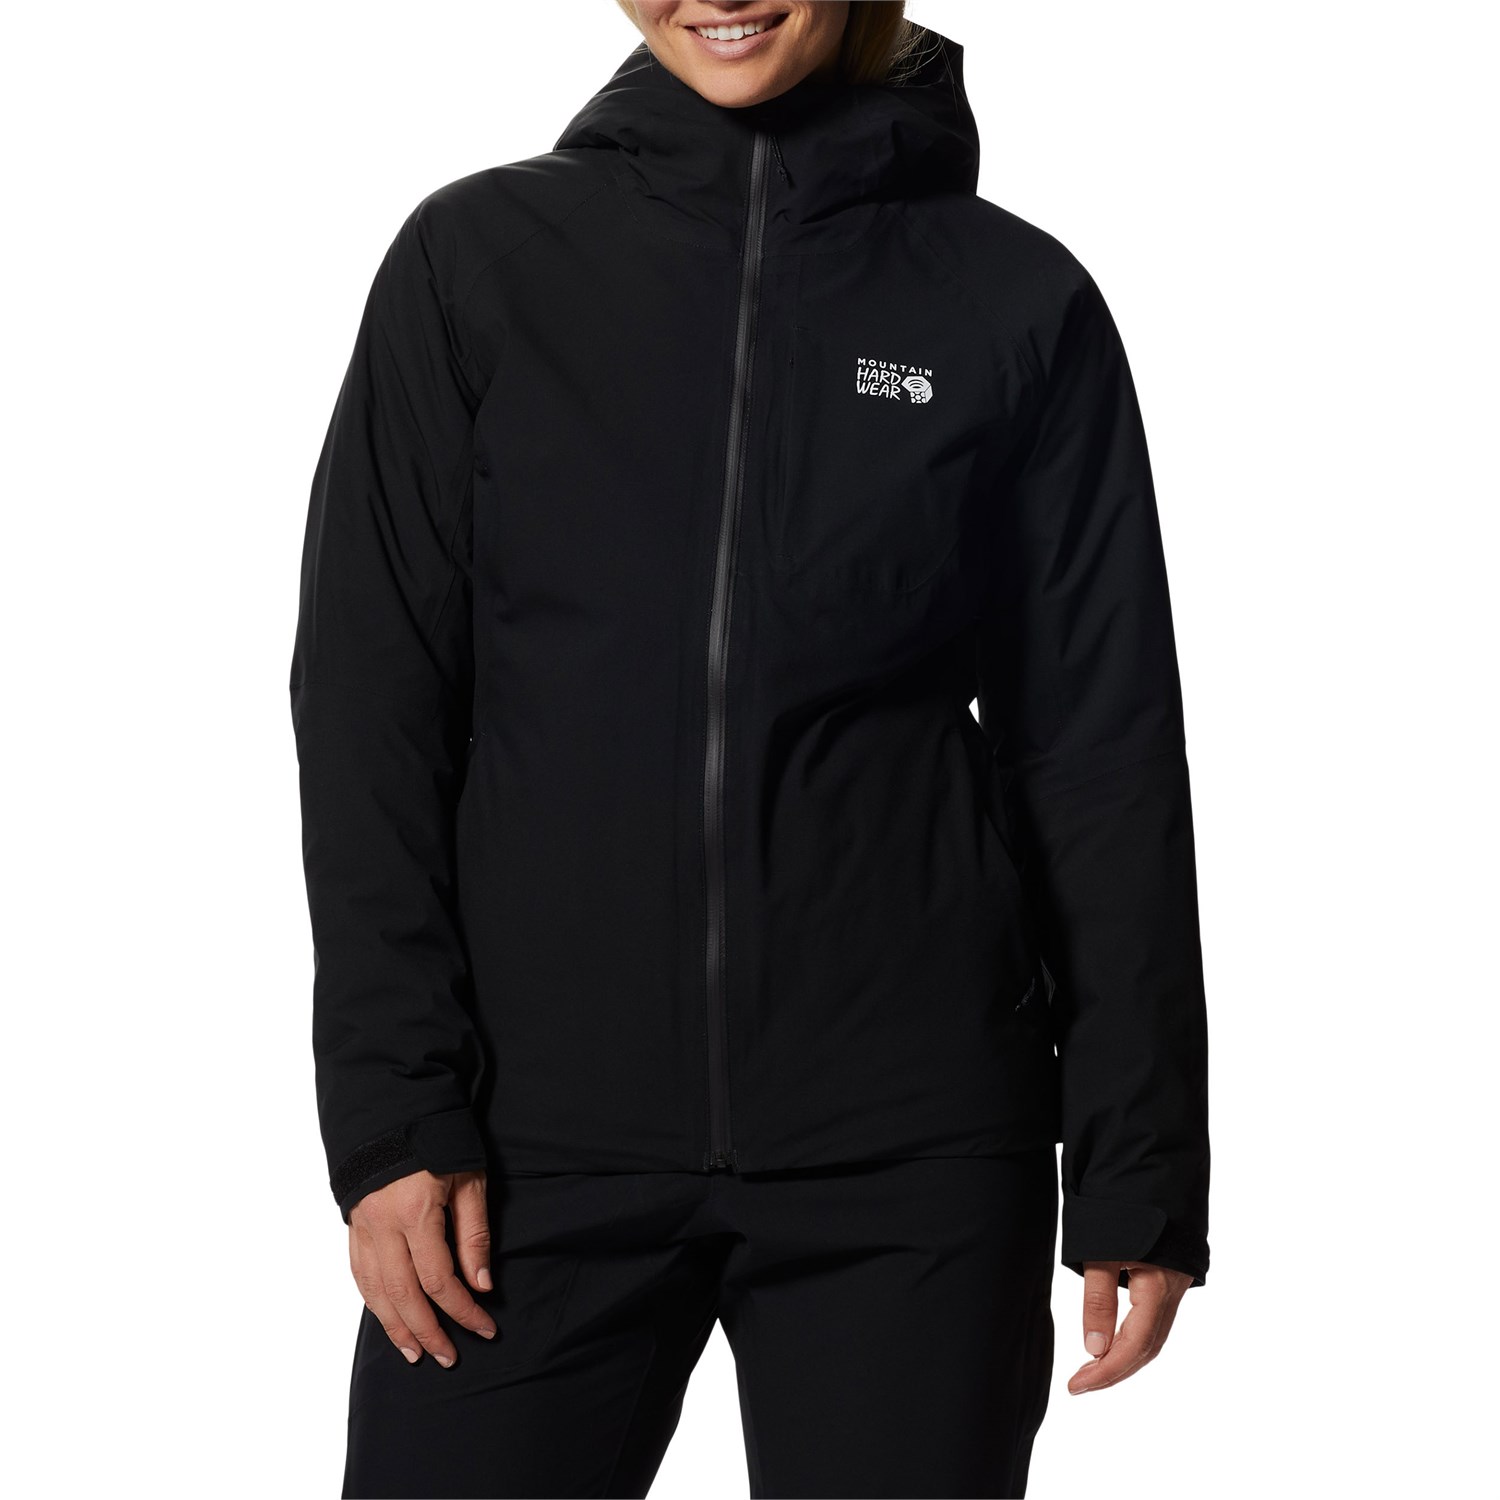 Куртка Mountain Hardwear Stretch Ozonic Insulated Jacket - Женская, черный куртка утепленная женская columbia suttle mountain long insulated jacket синий размер 46